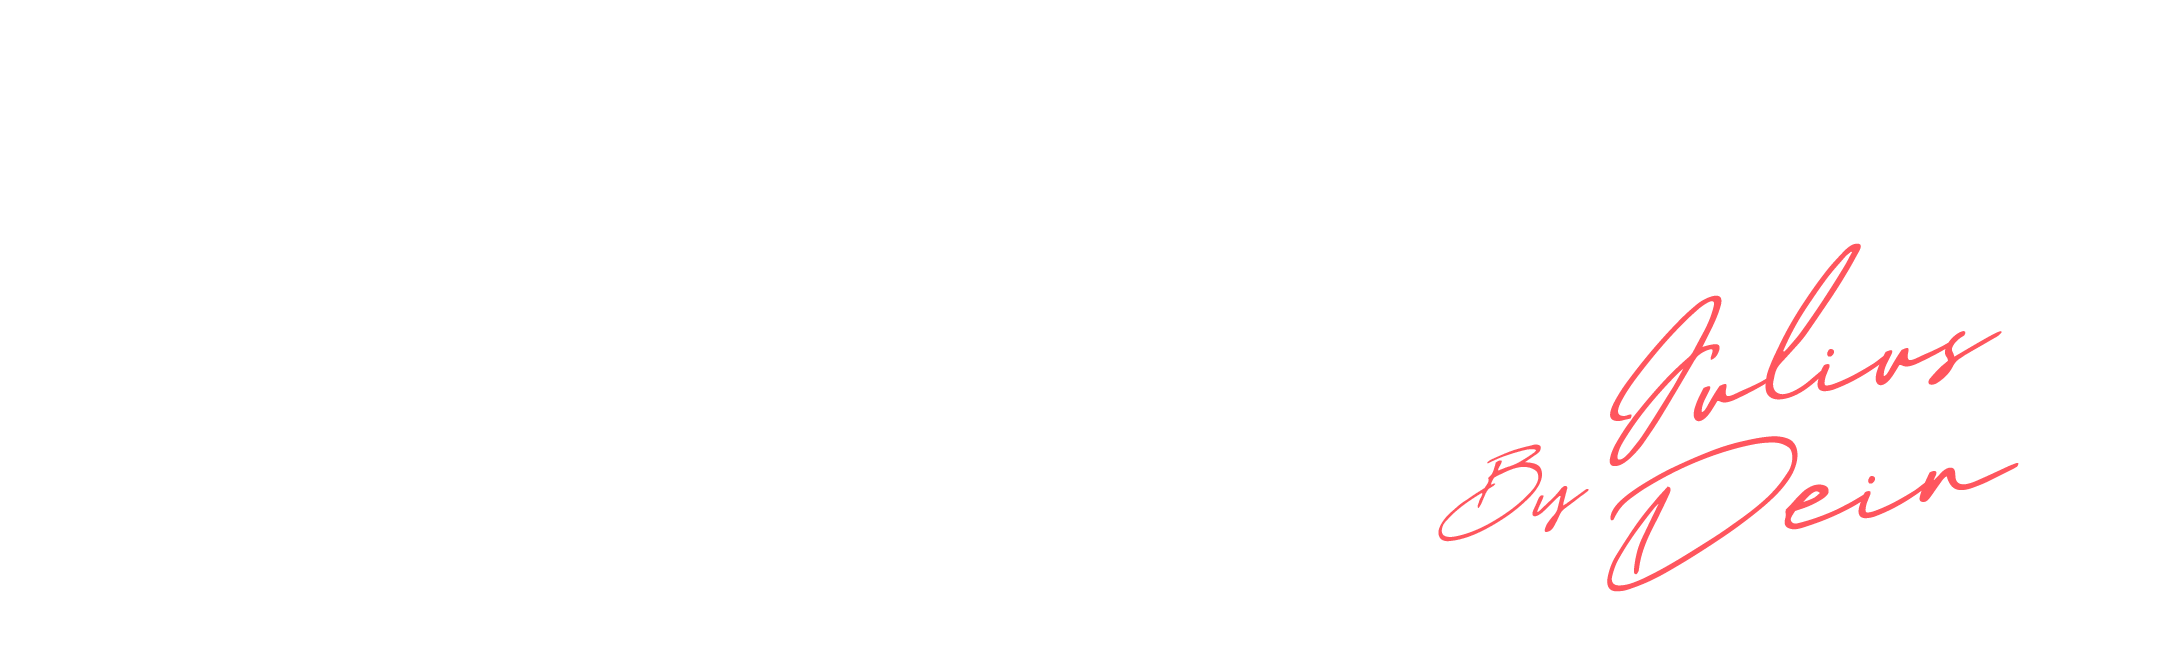 magic-text02